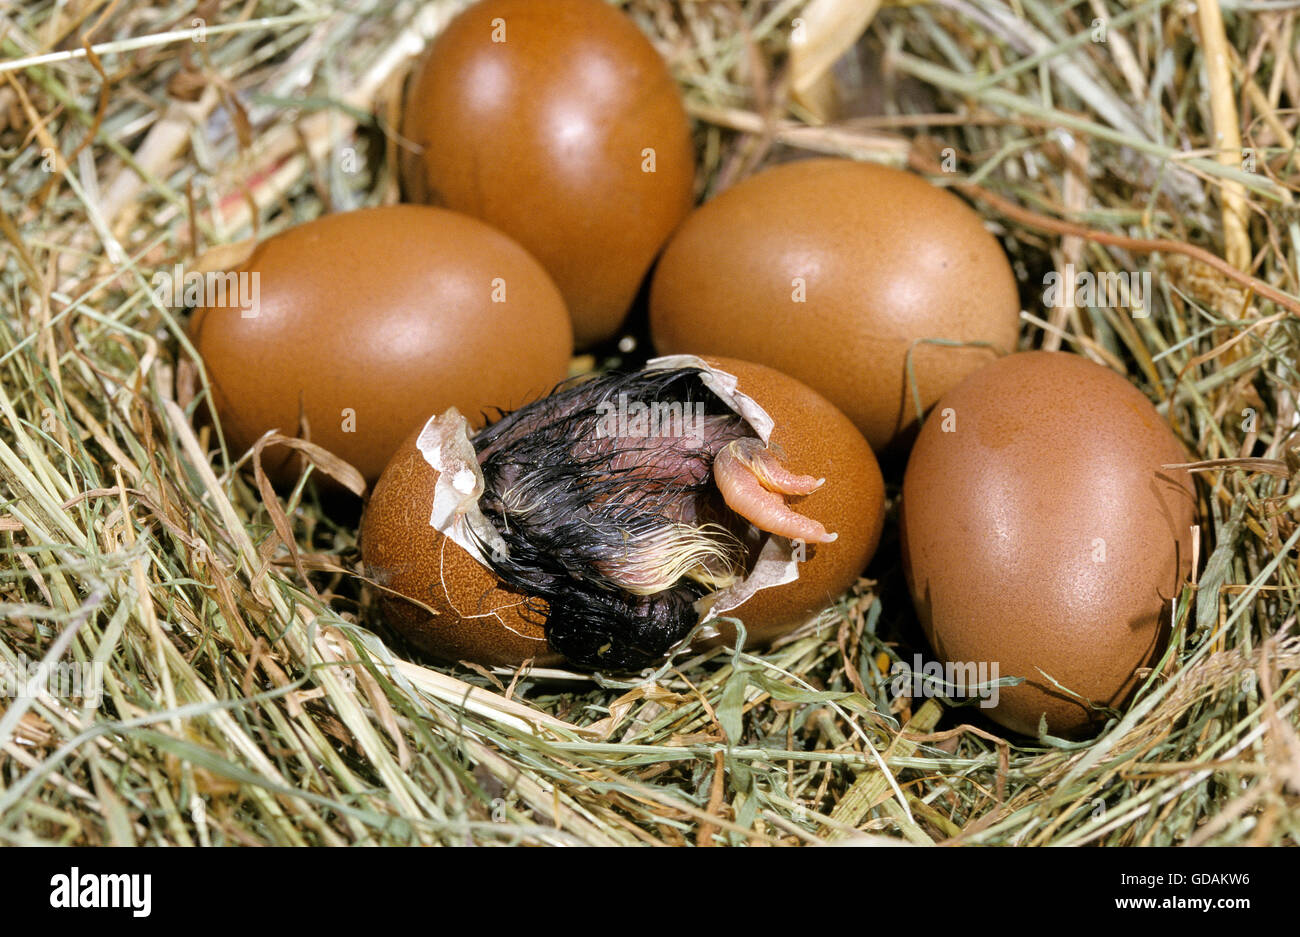 Nest mit Eiern, Haushuhn, Küken schlüpft aus Ei Stockfotografie - Alamy